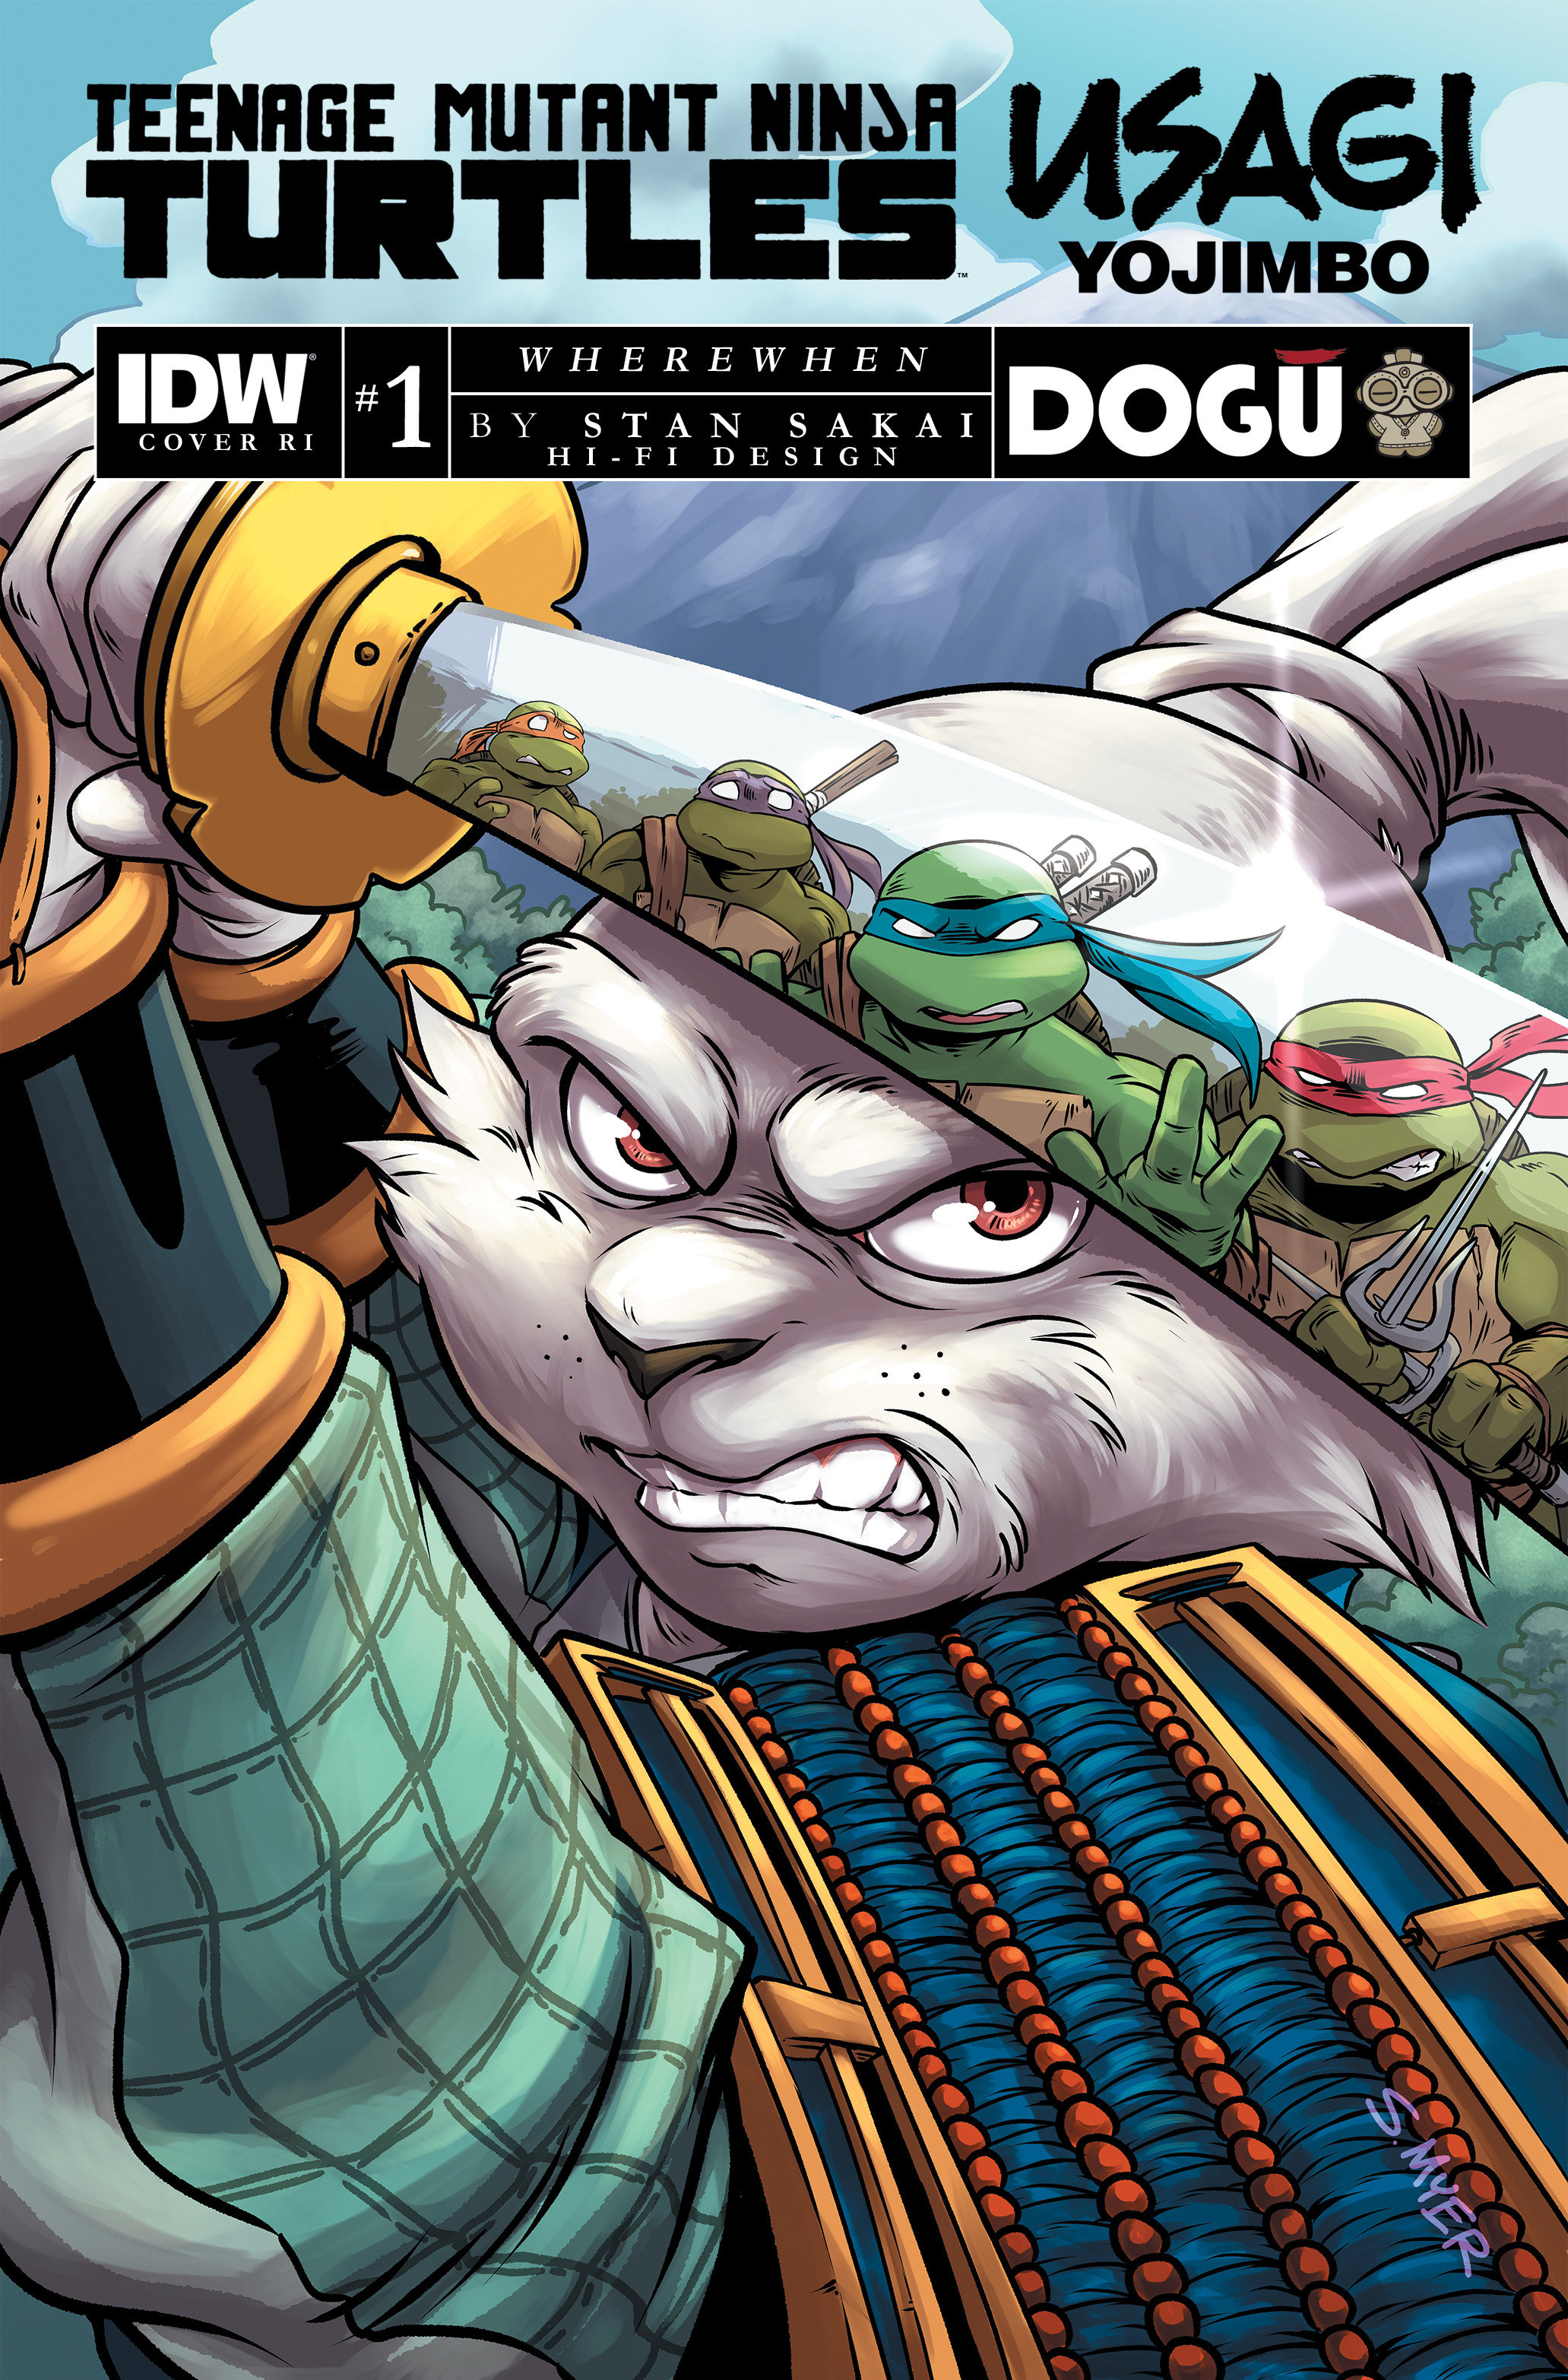 Teenage Mutant Ninja Turtles/Usagi Yojimbo WhereWhen #1 Cover D 1 for 10 Incentive Myer